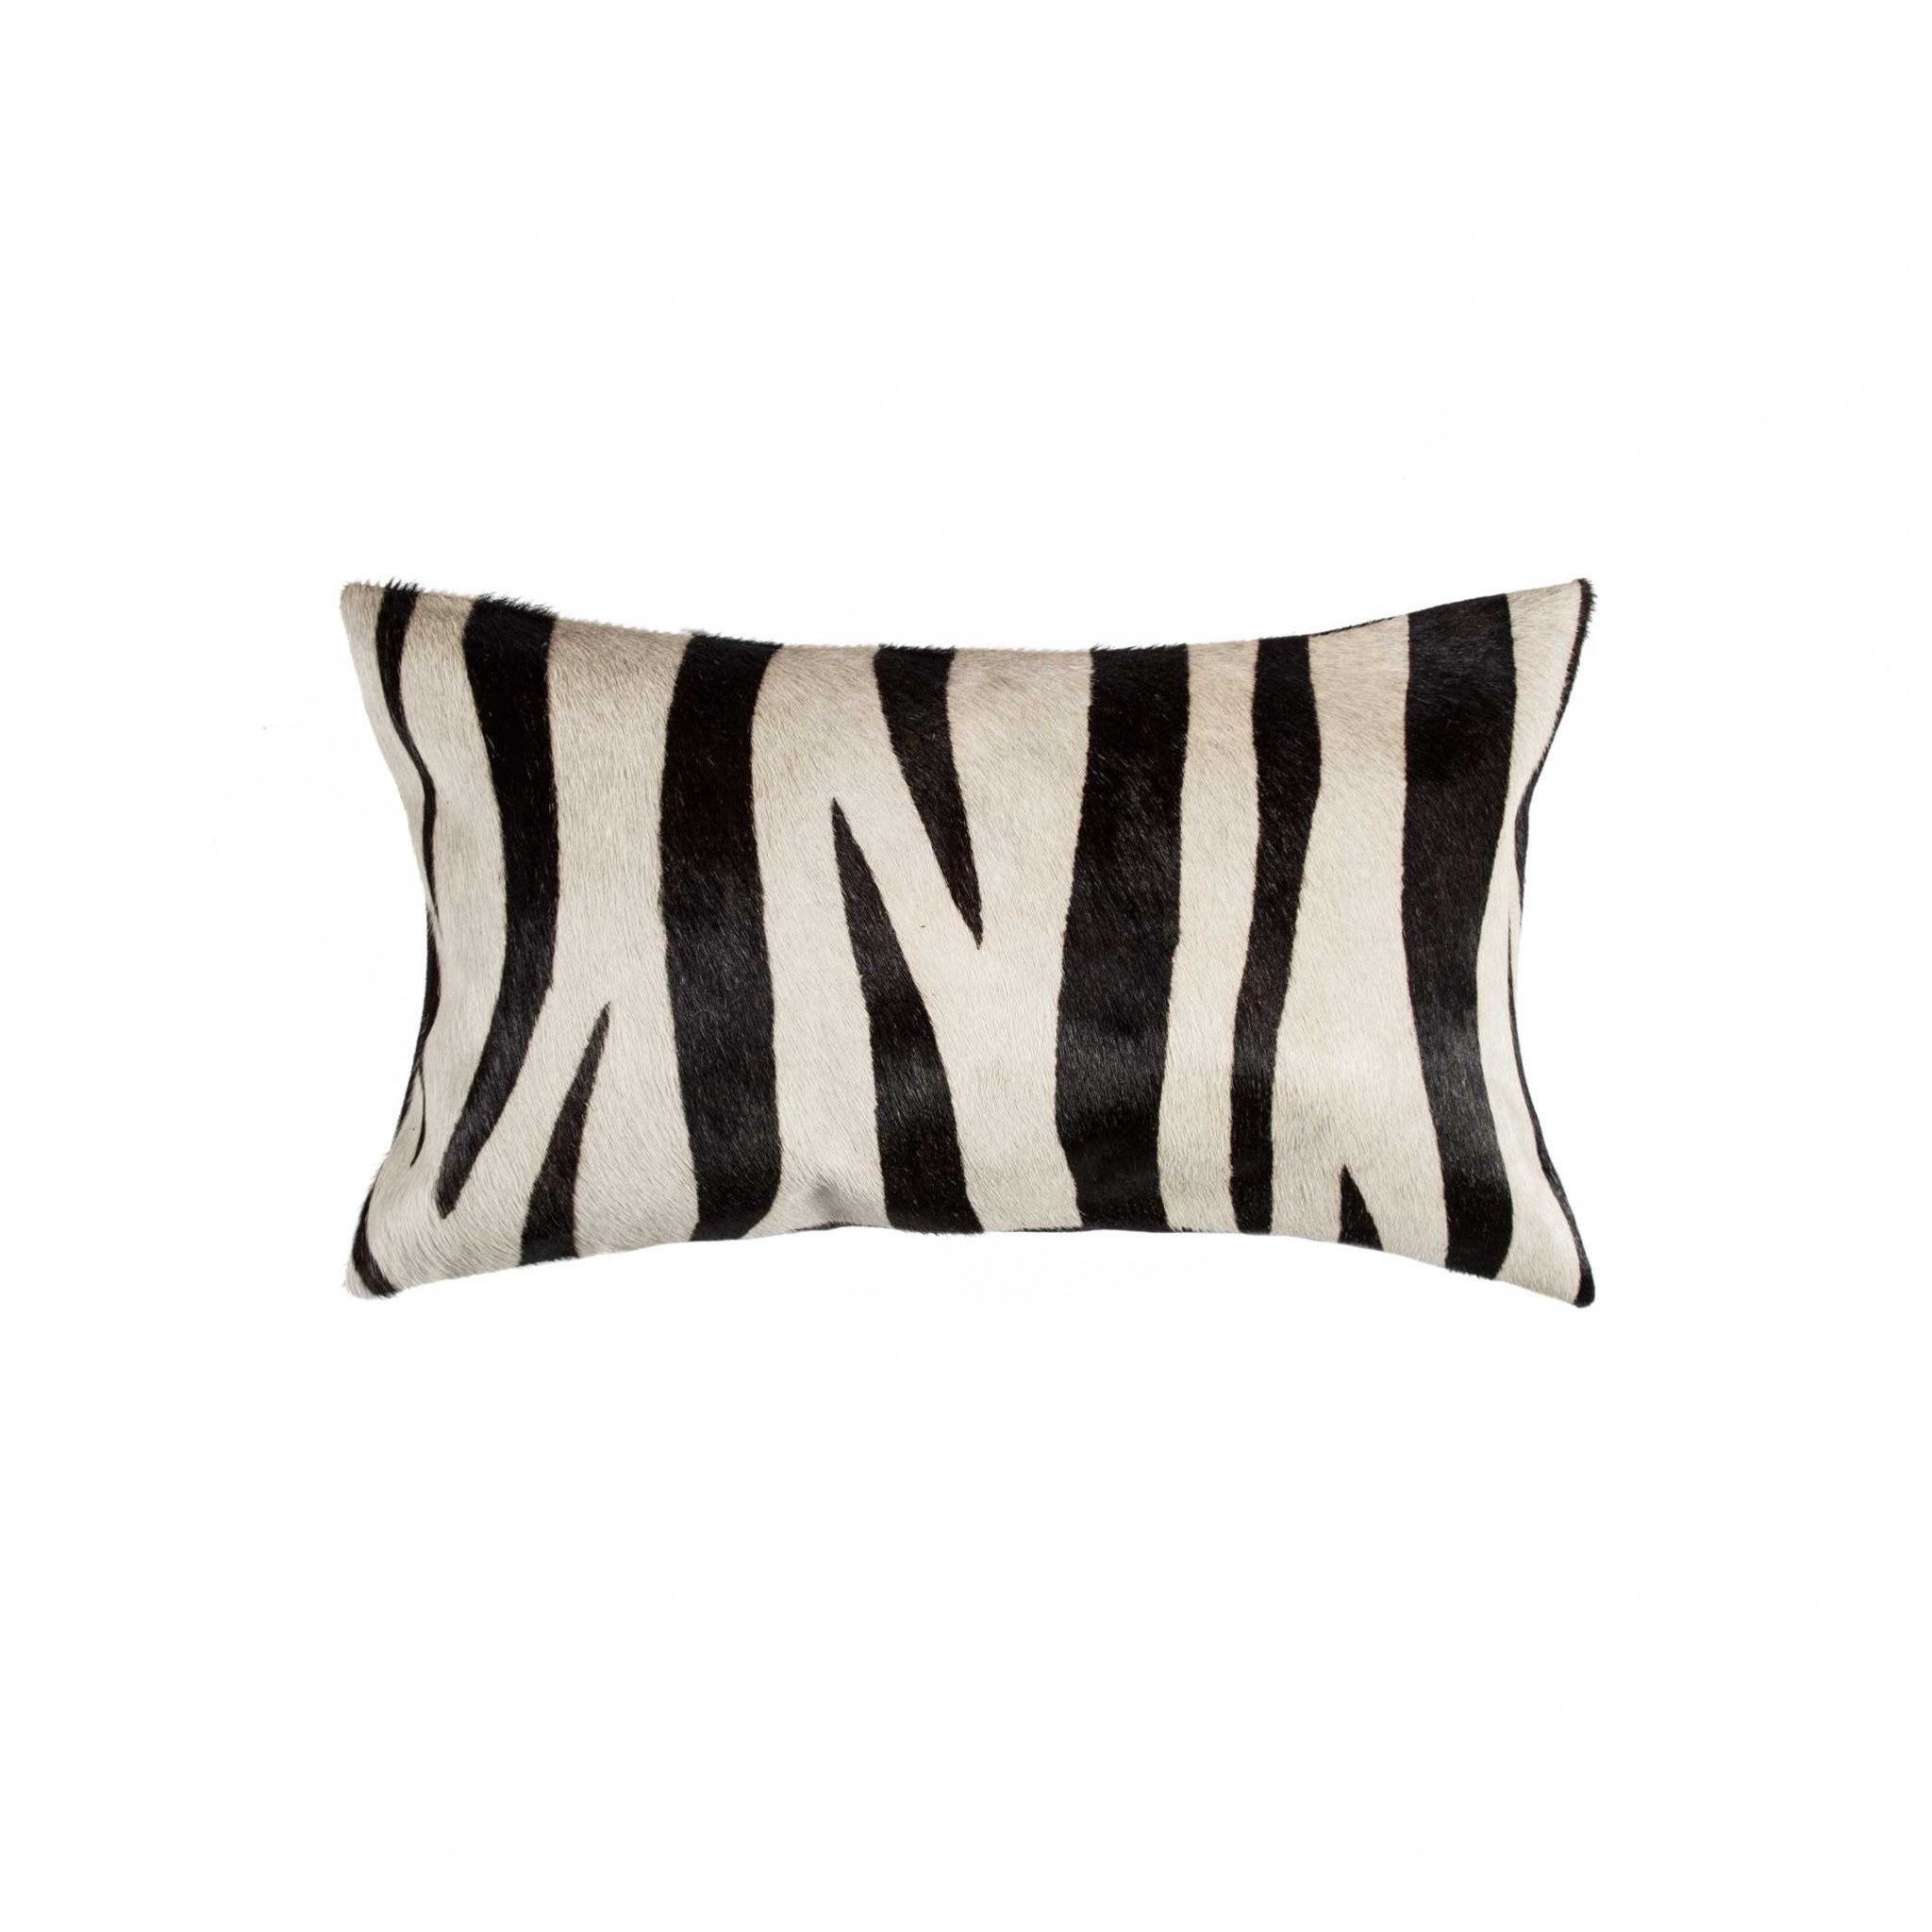 12" x 20" x 5" Zebra Black On Off White Cowhide - Pillow